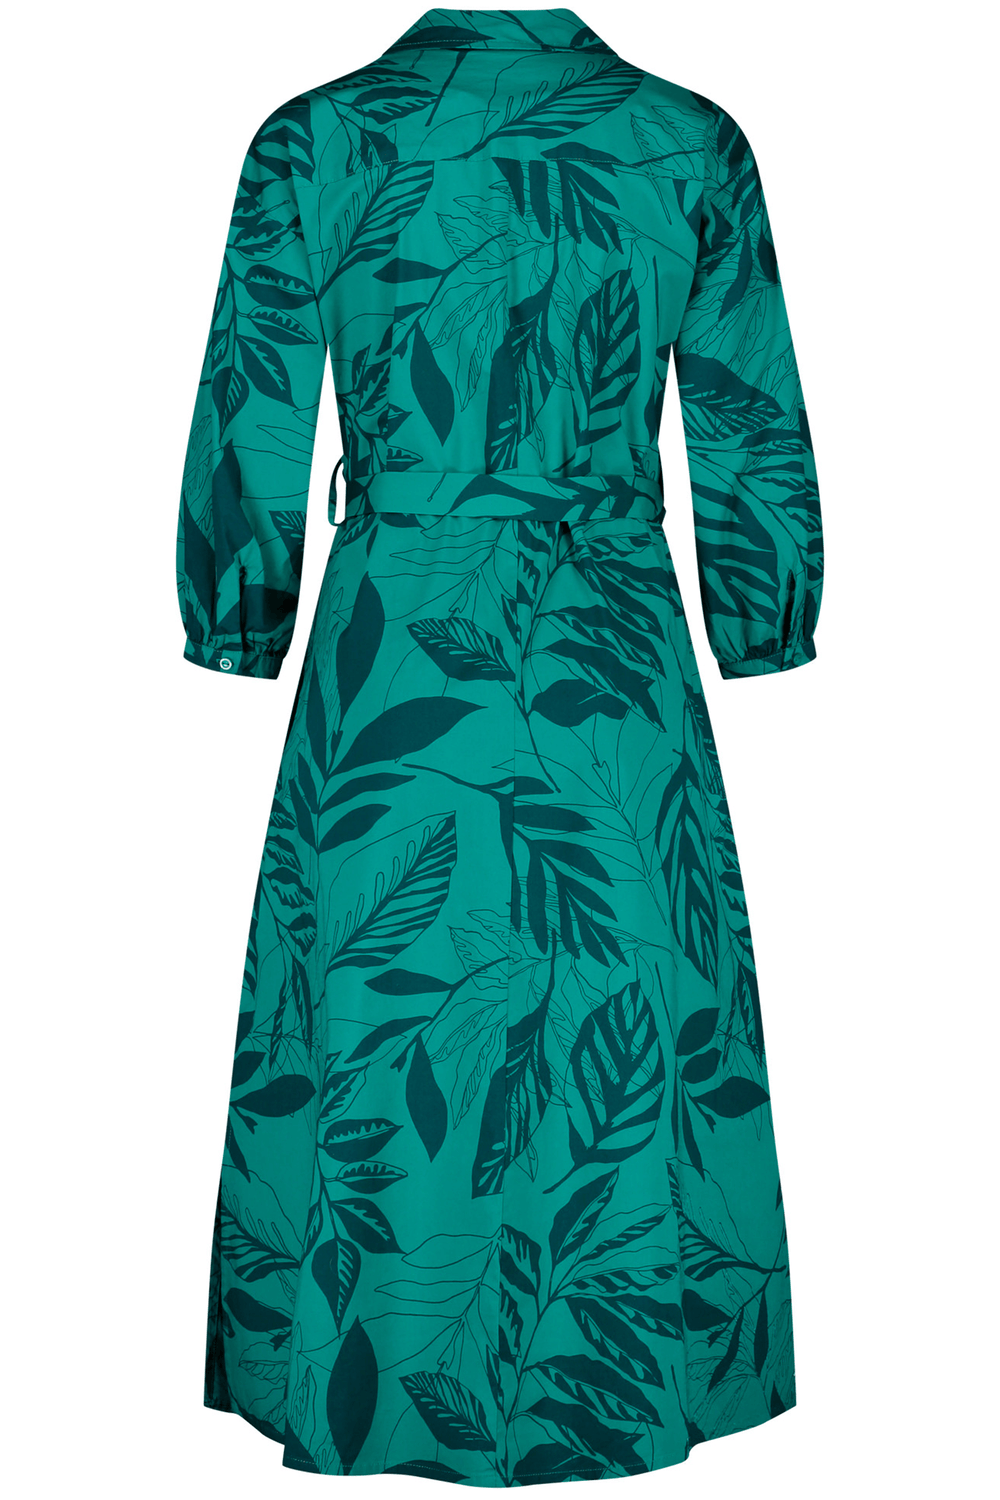 Gerry Weber 780011-31513 5111 Green Seaweed Pine Print Dress - Shirley Allum Boutique